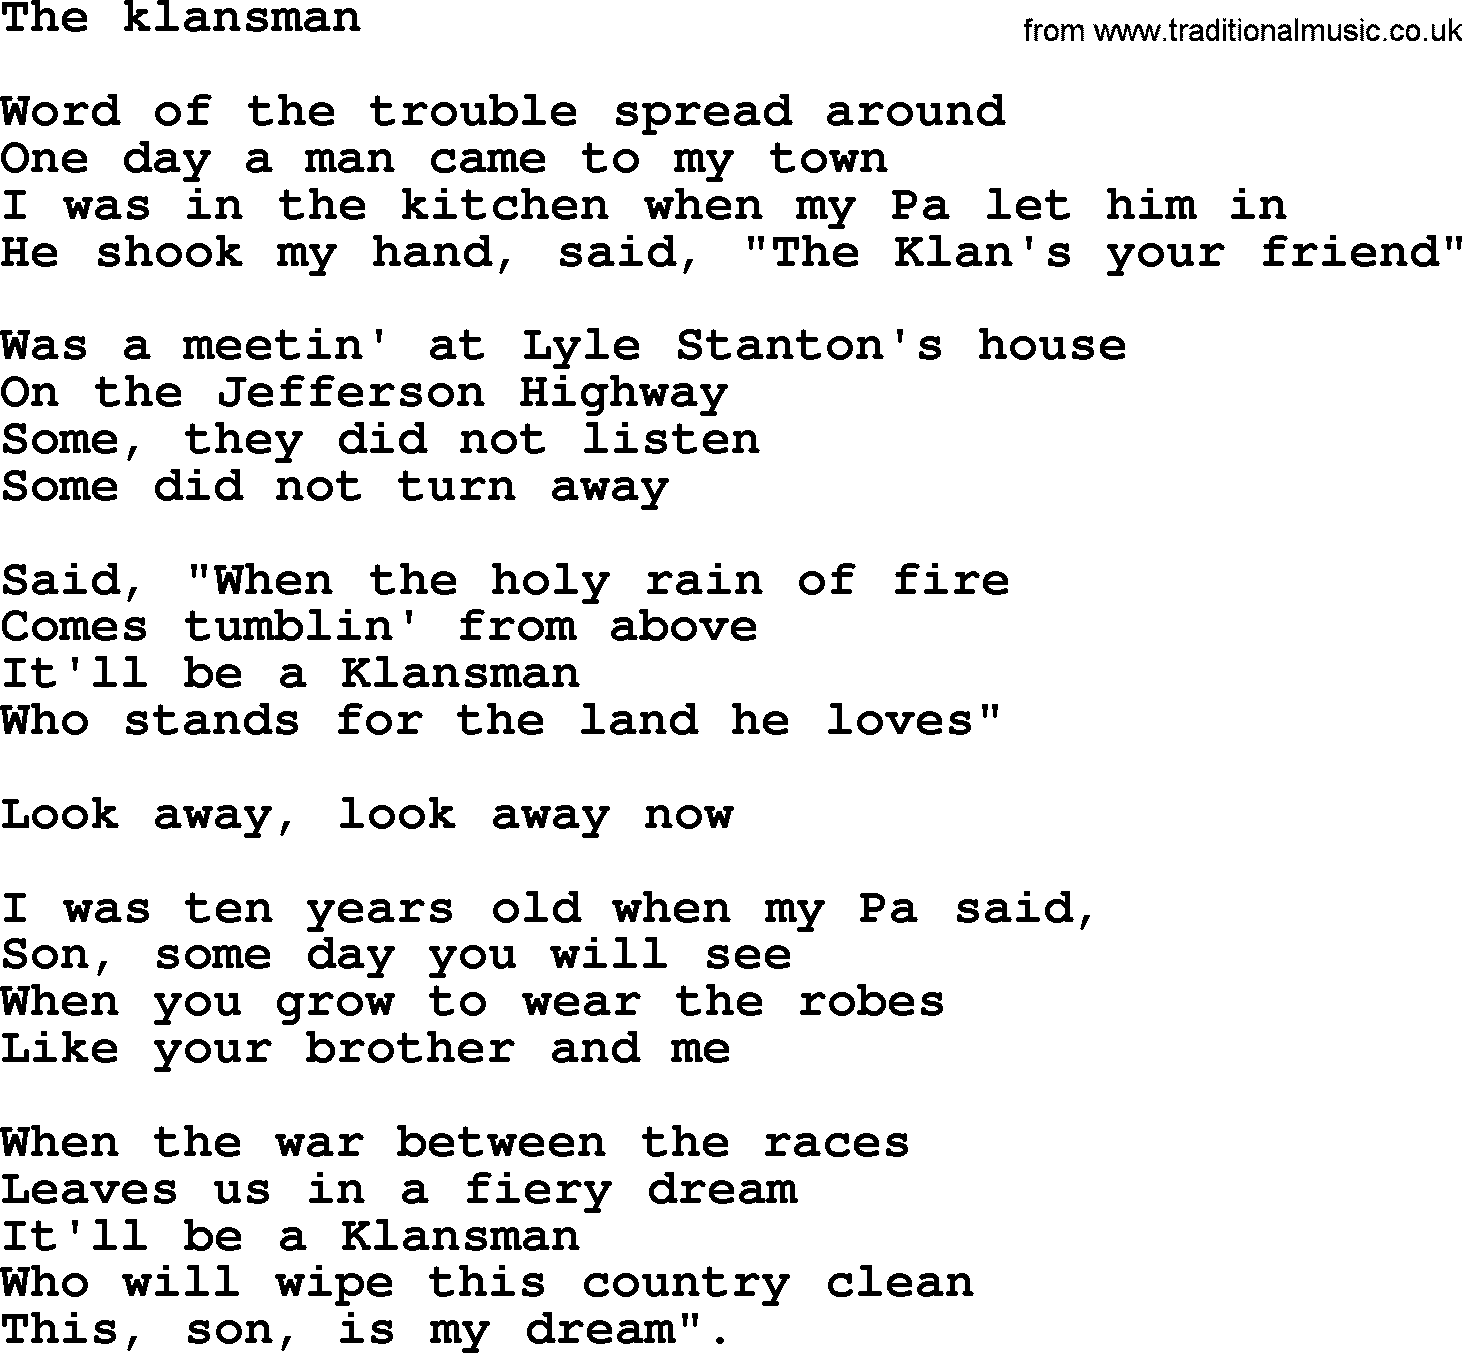 Bruce Springsteen song: The Klansman lyrics